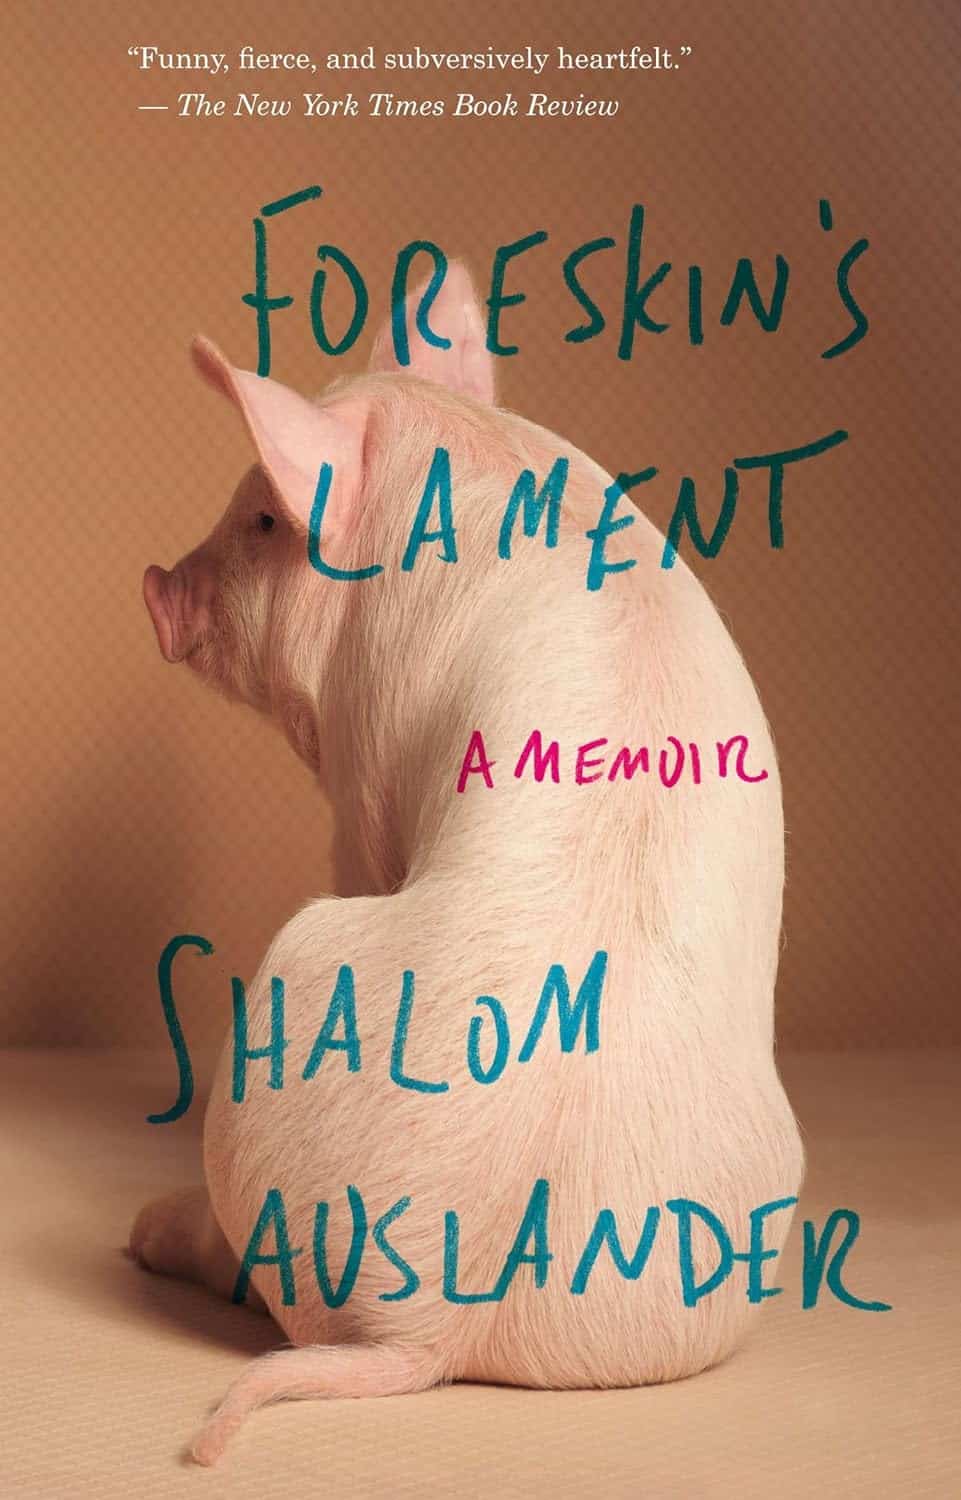 Foreskin's Lament: A Memoir by Shalom Auslander (2009)